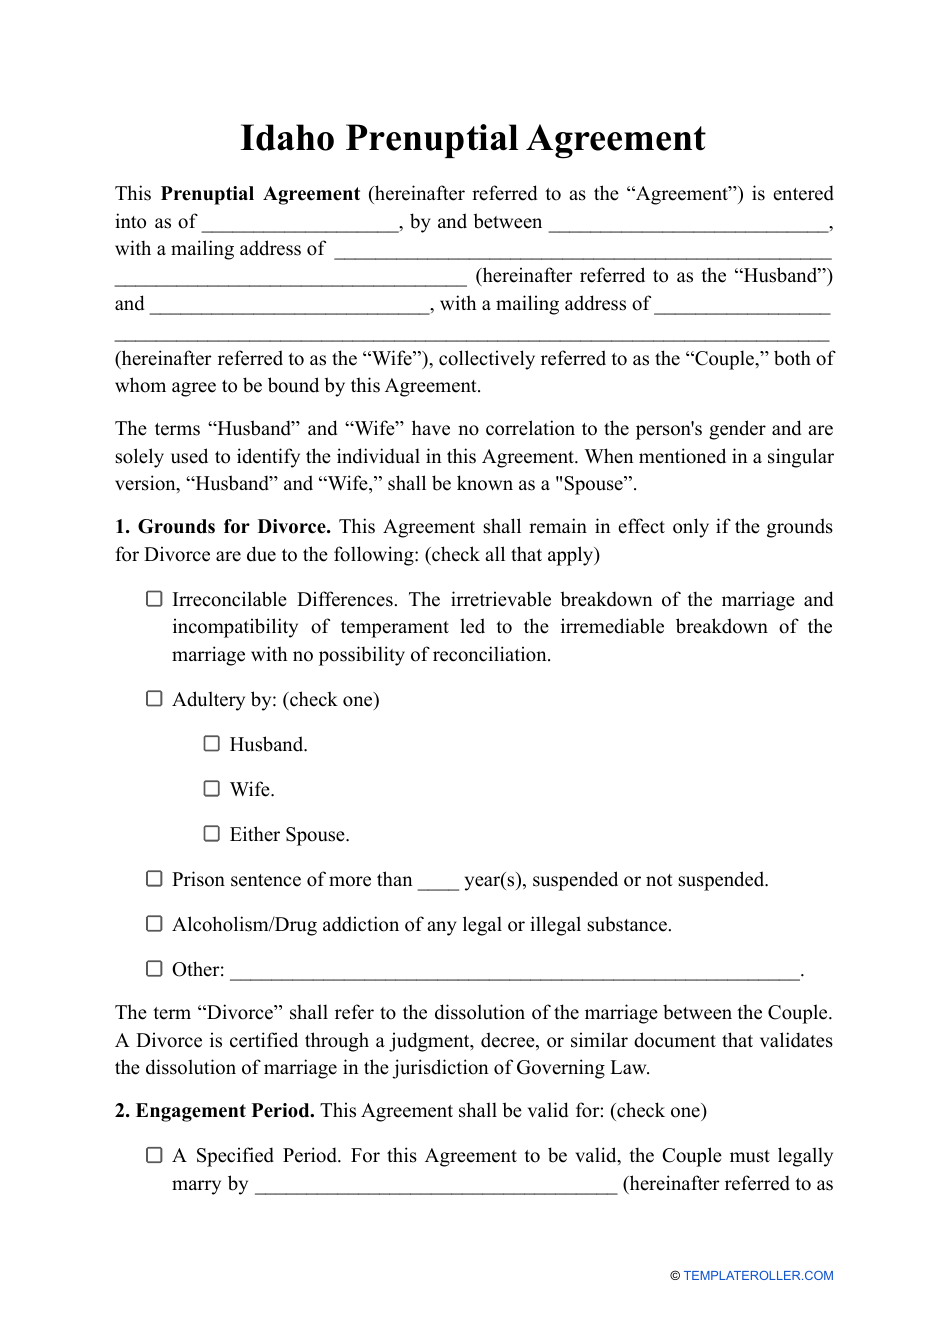 Prenuptial Agreement Template - Idaho, Page 1